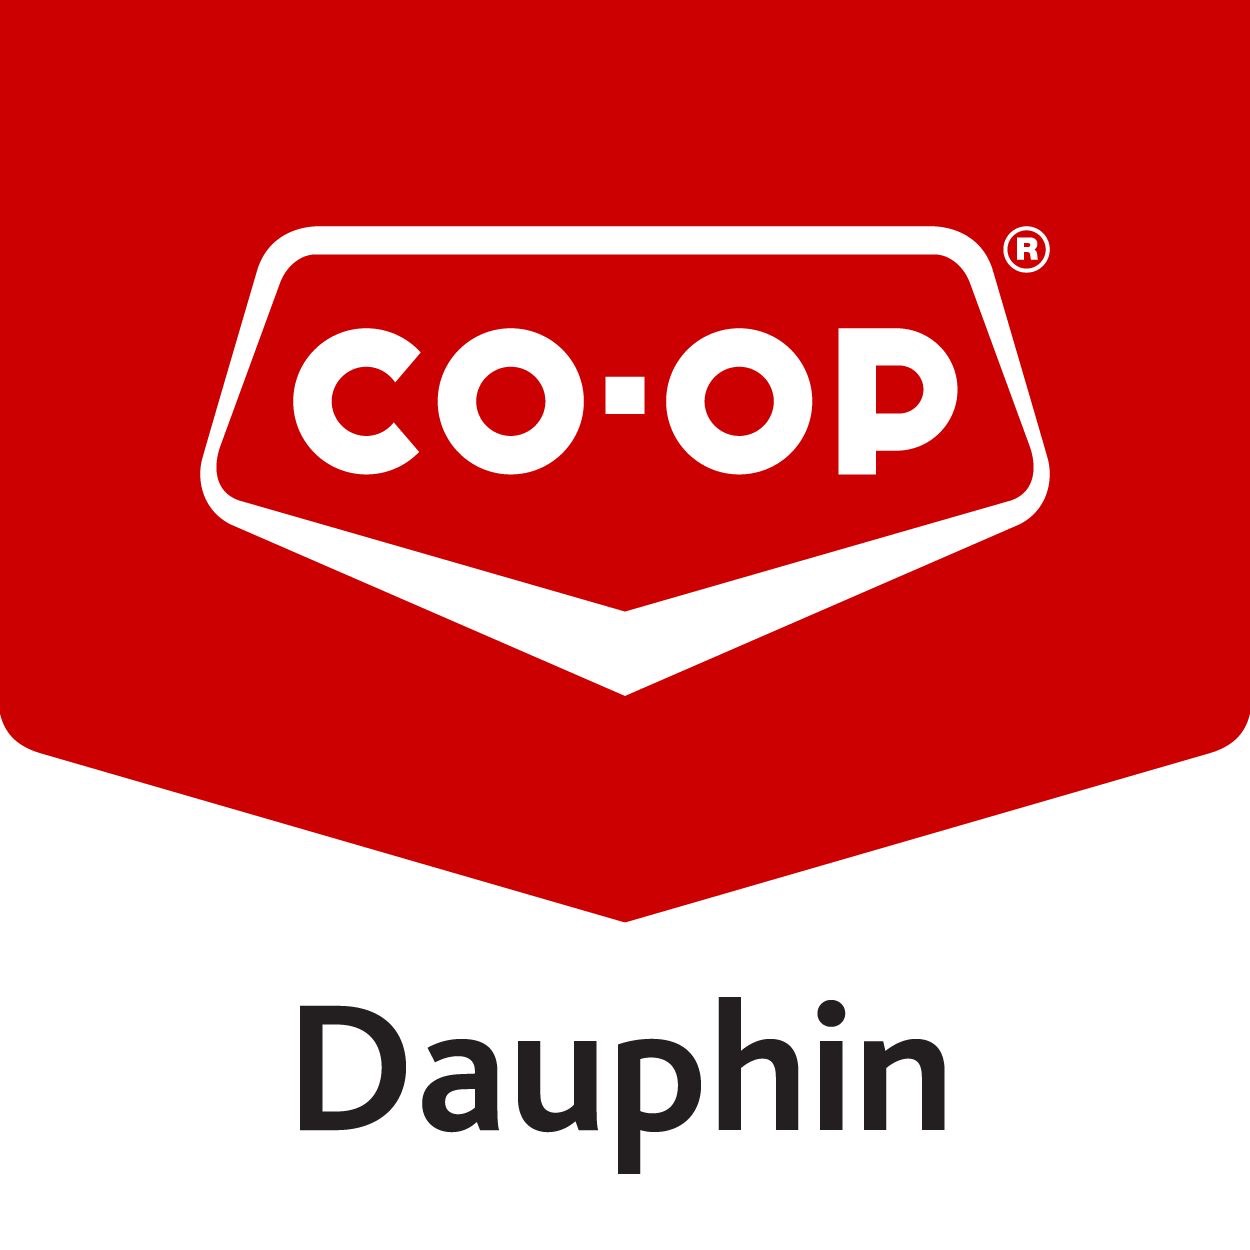 Dauphin Co Op Logo 